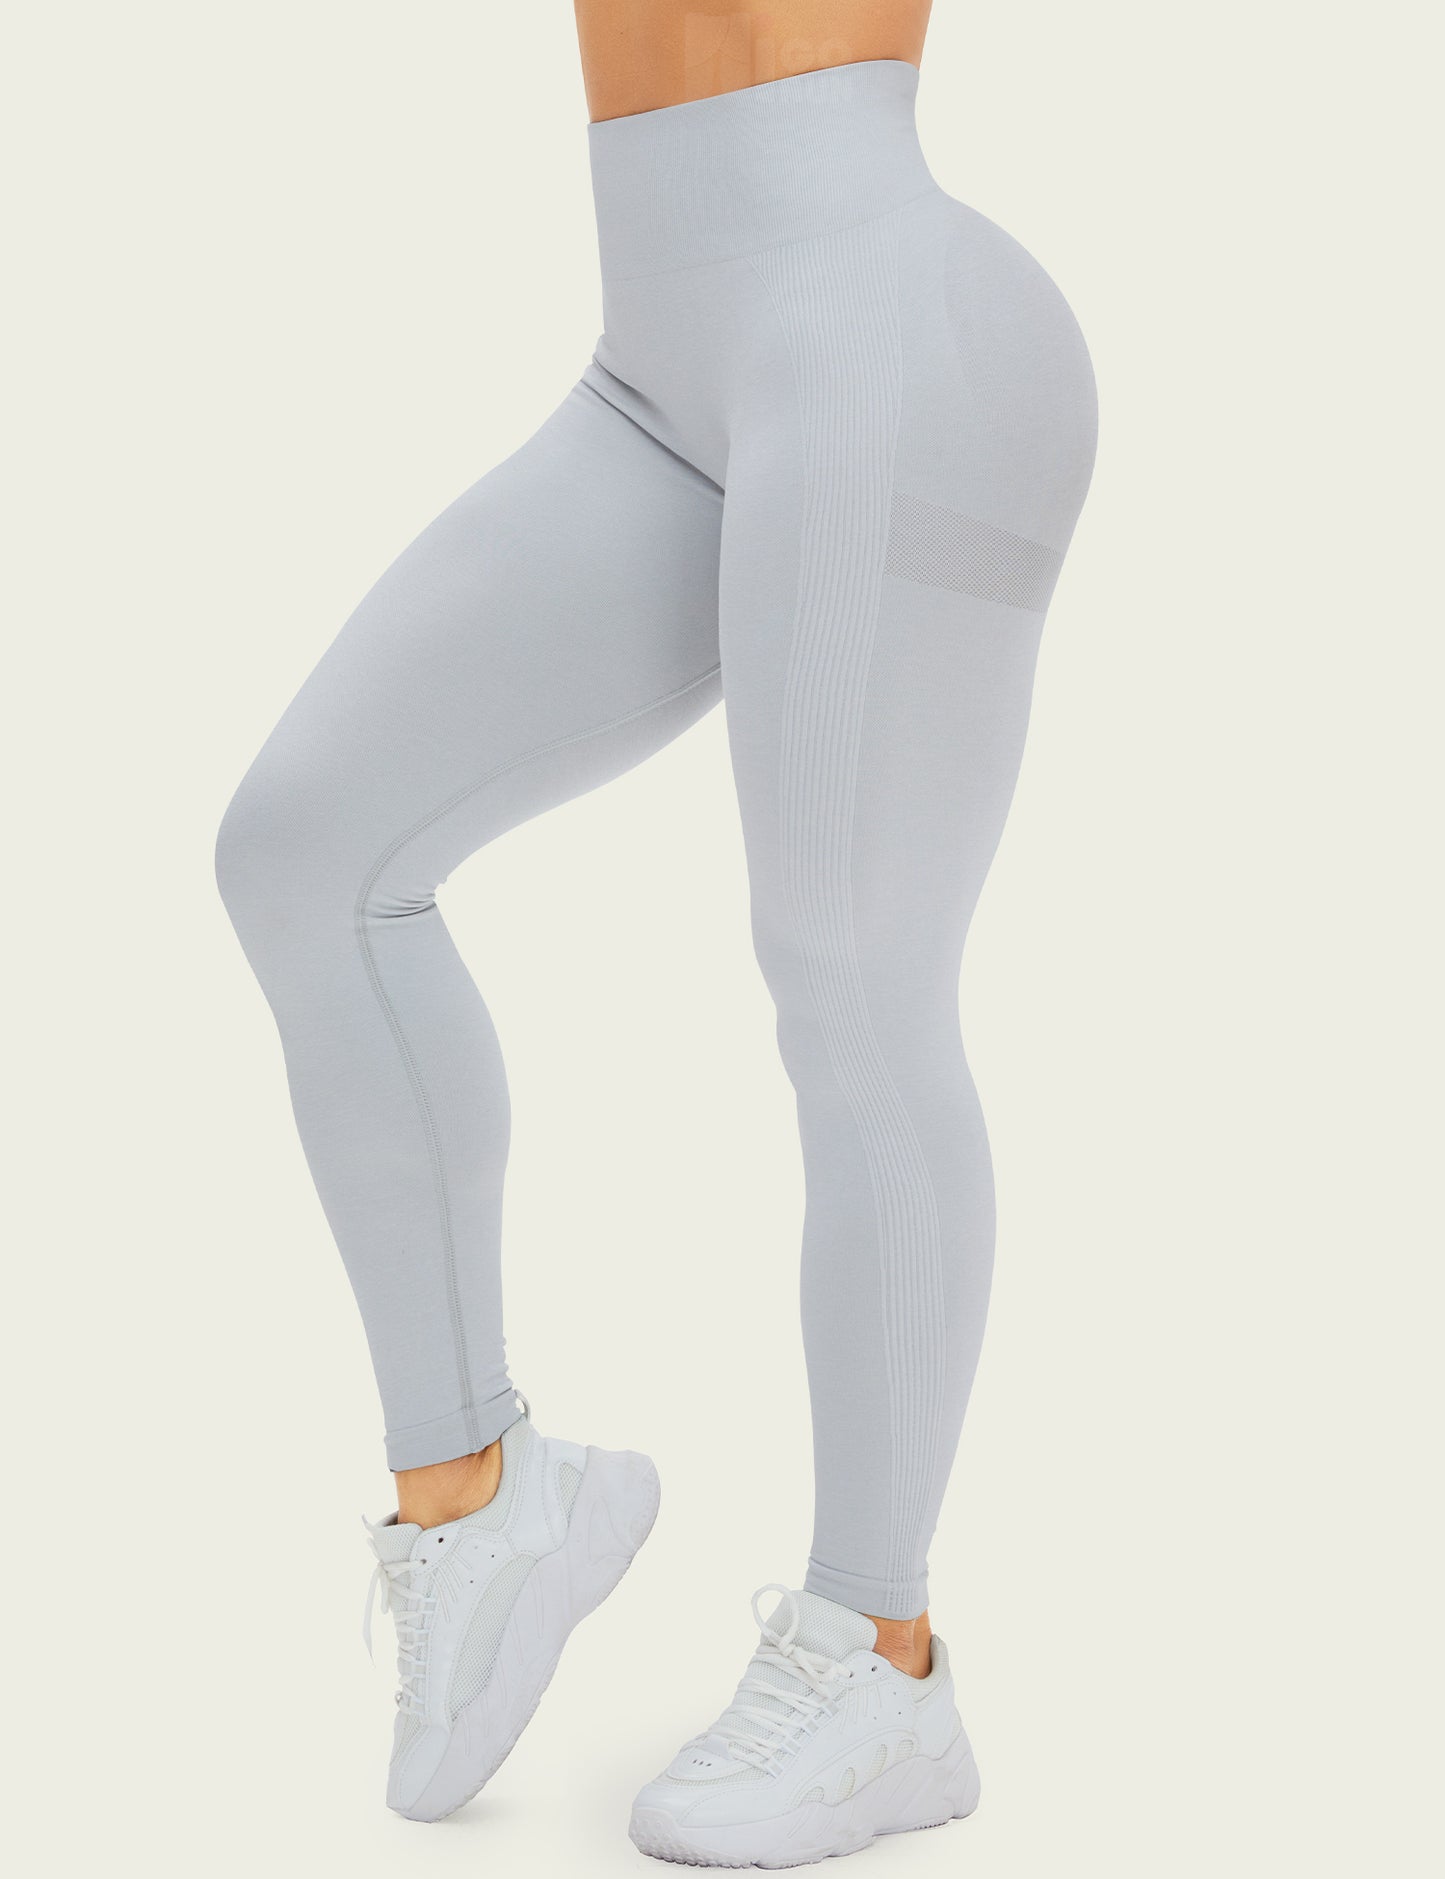 HIGORUN Tie Dye Workout Seamless Leggings for Women High Waist Gym Leggings Yoga Pants Light Grey